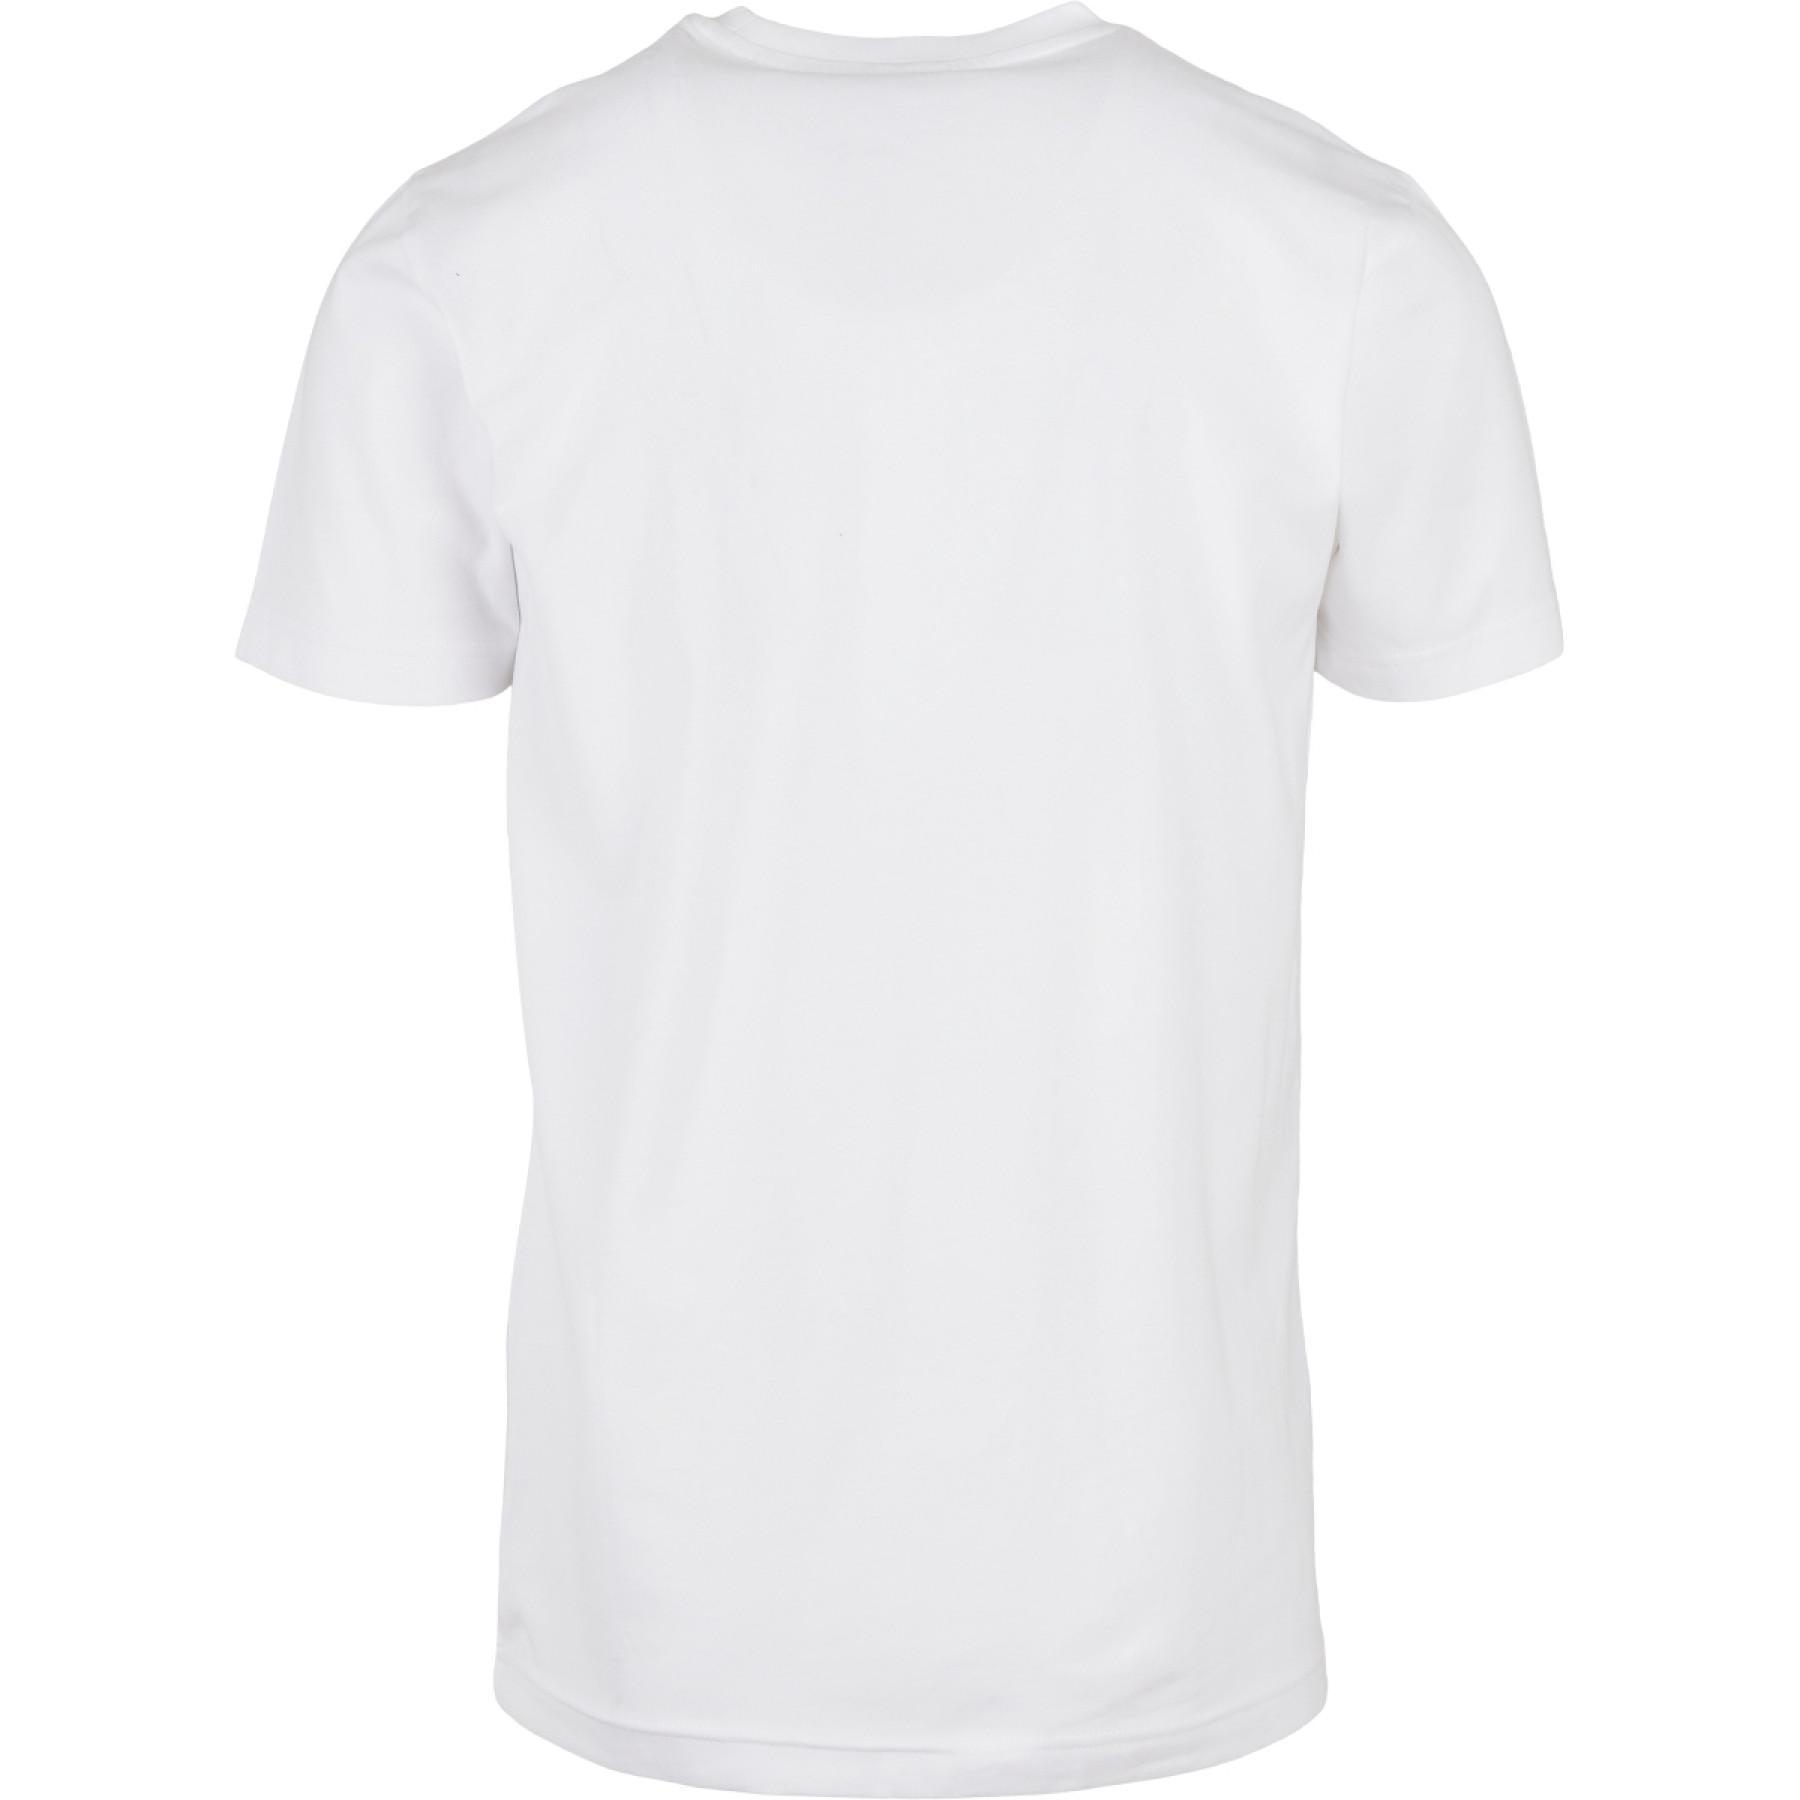 T-shirt Urban Classics coton organique basic pocket-grandes tailles